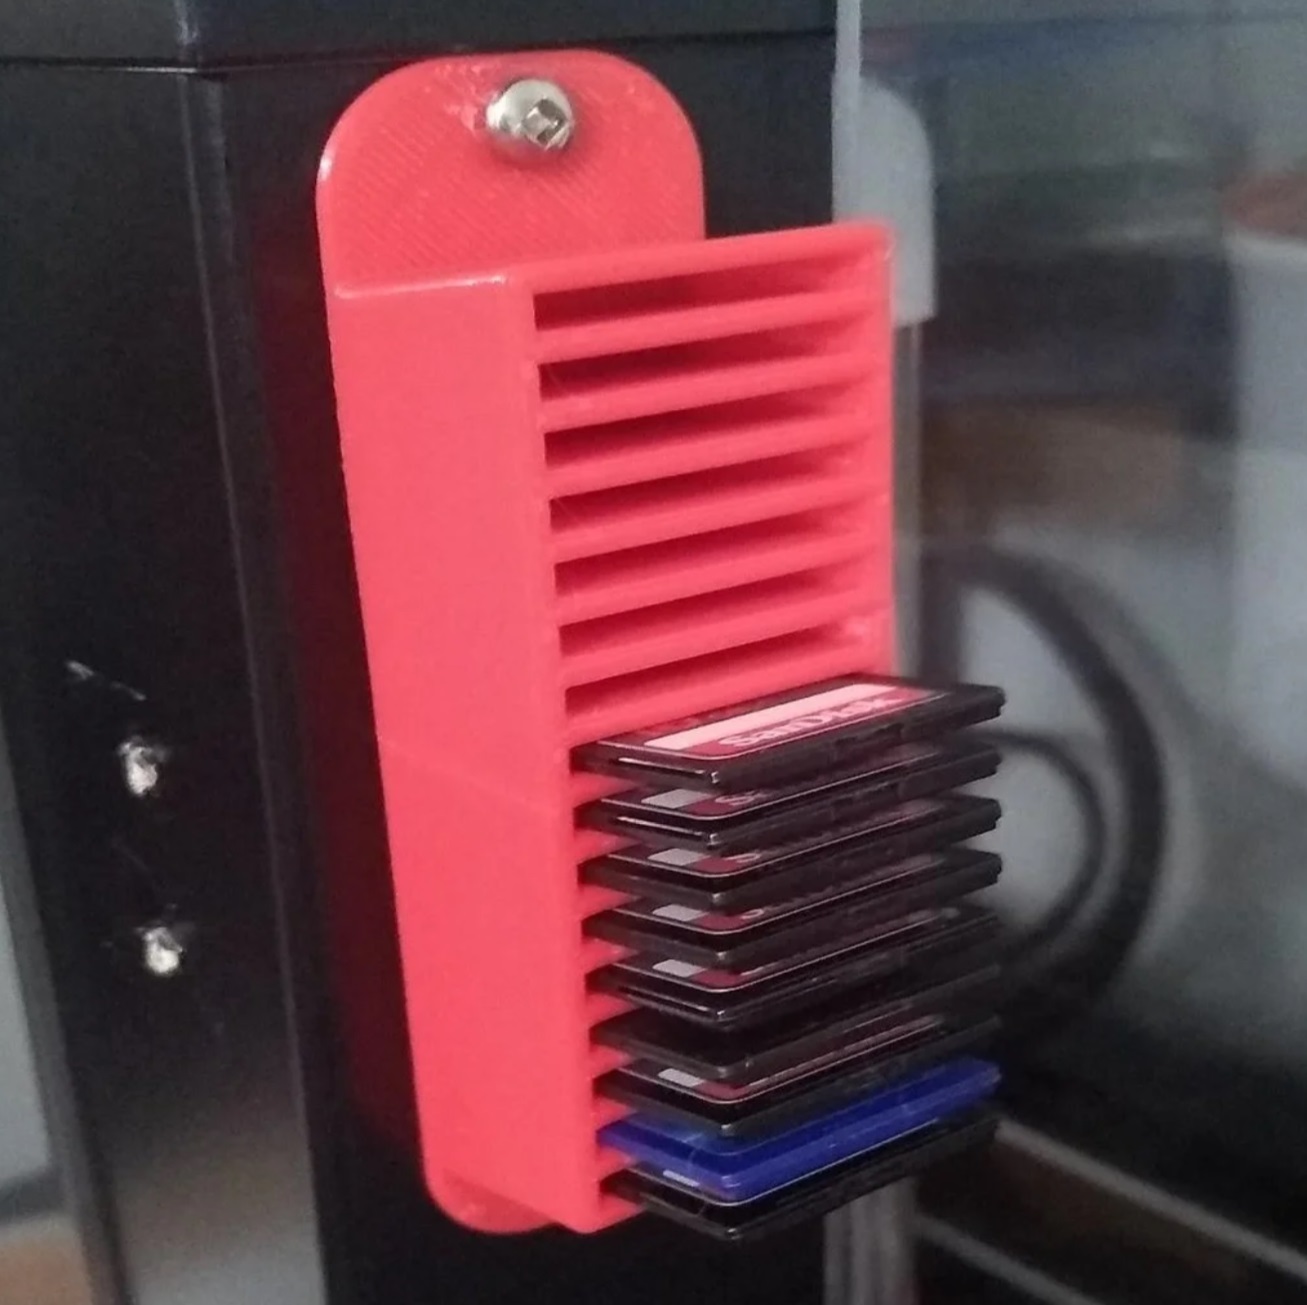 Printer mounted sdcard holder